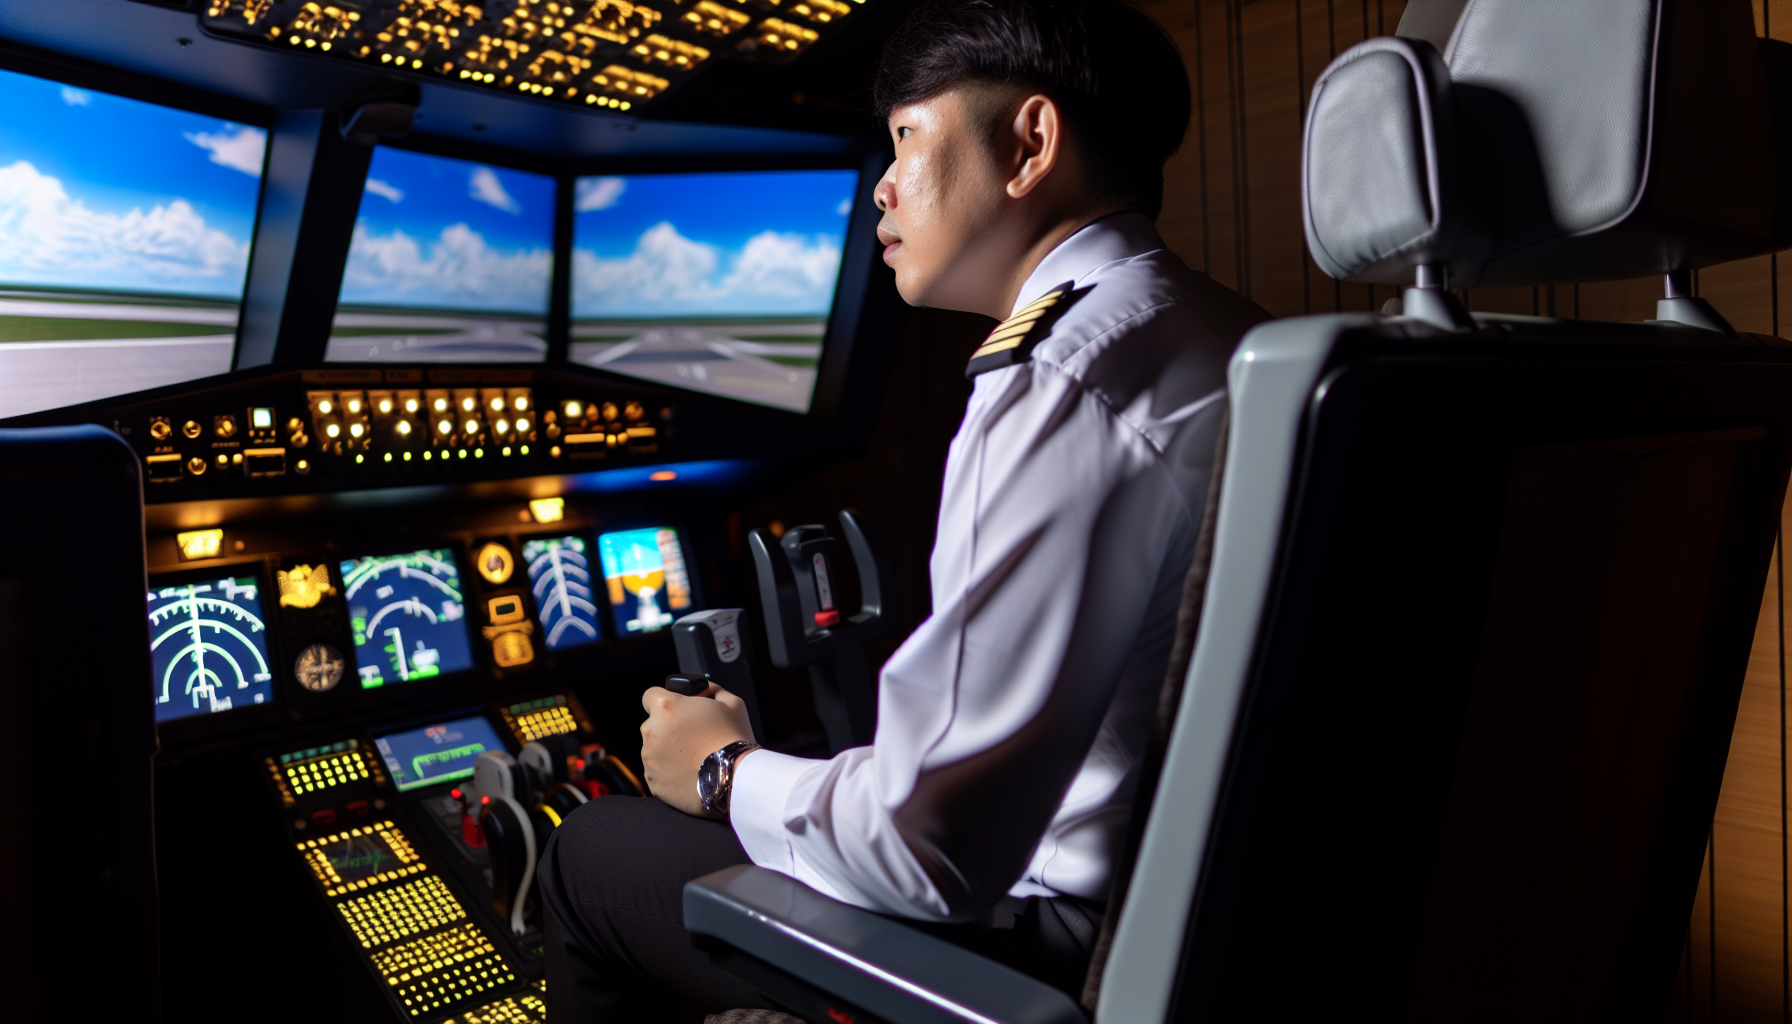 Pilot training with flight simulator